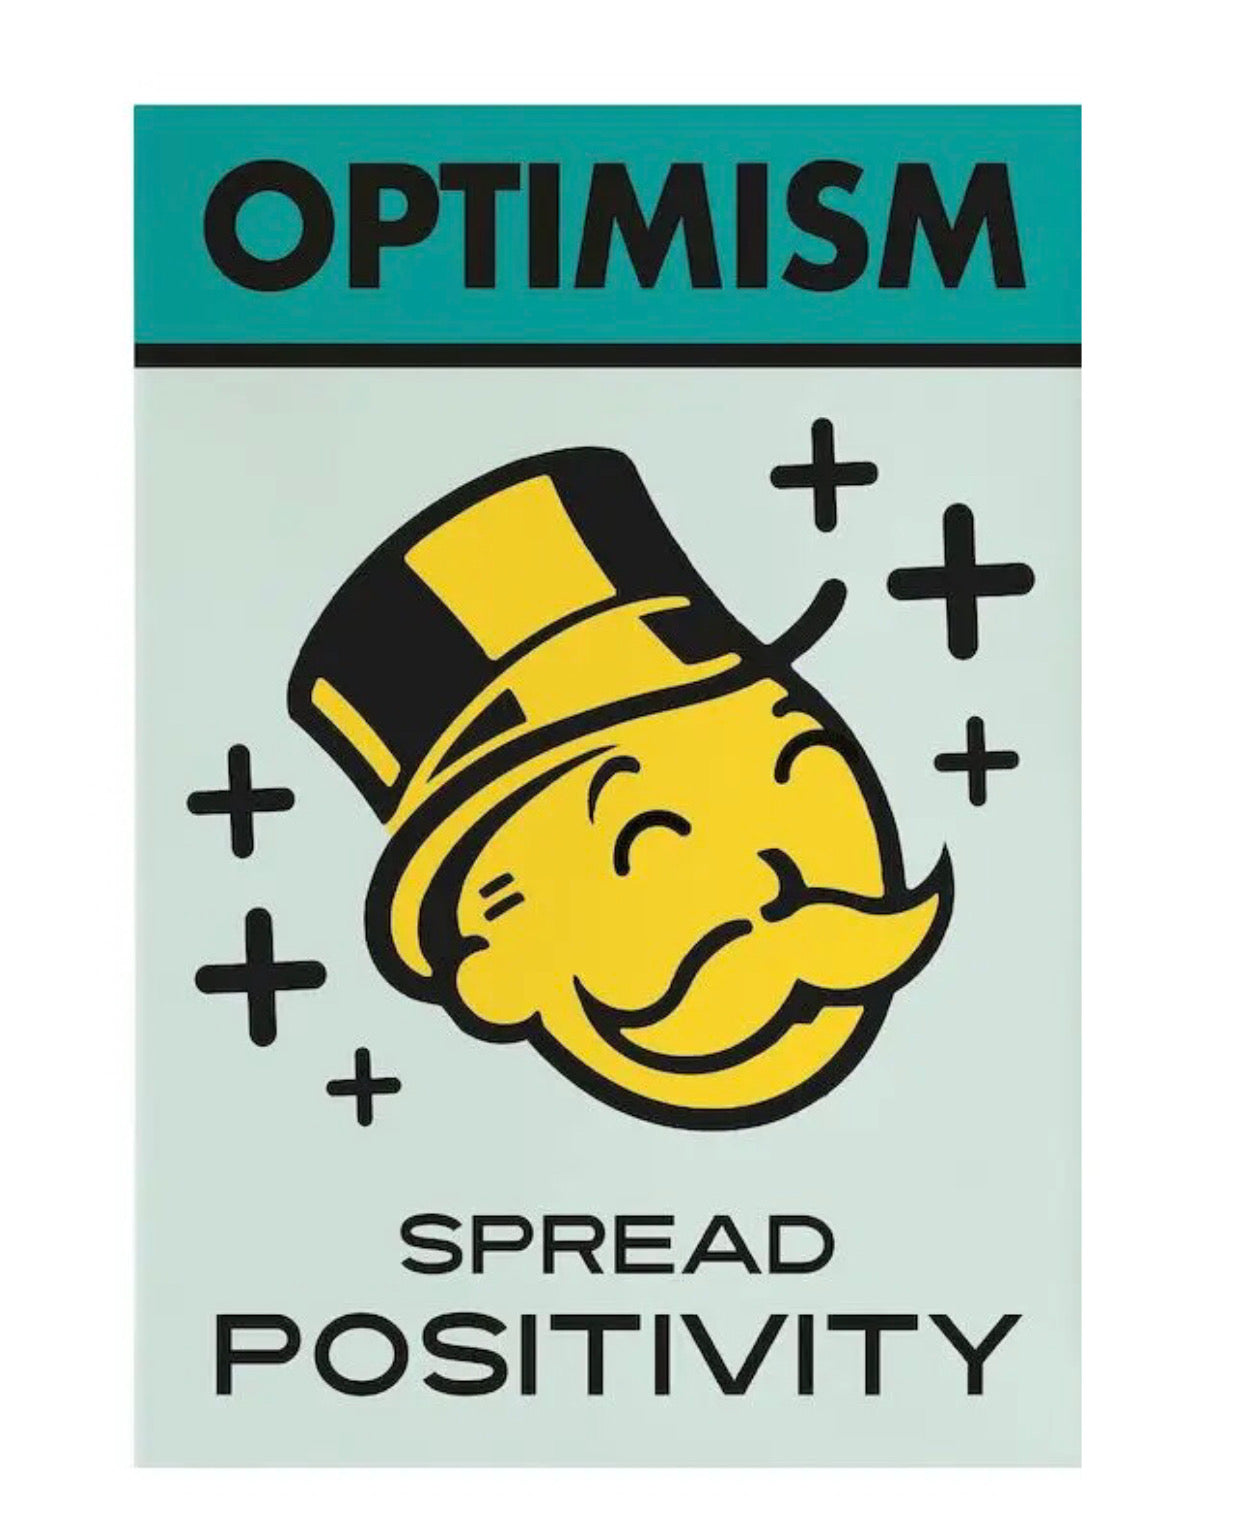 "optimism spread positivity" poster